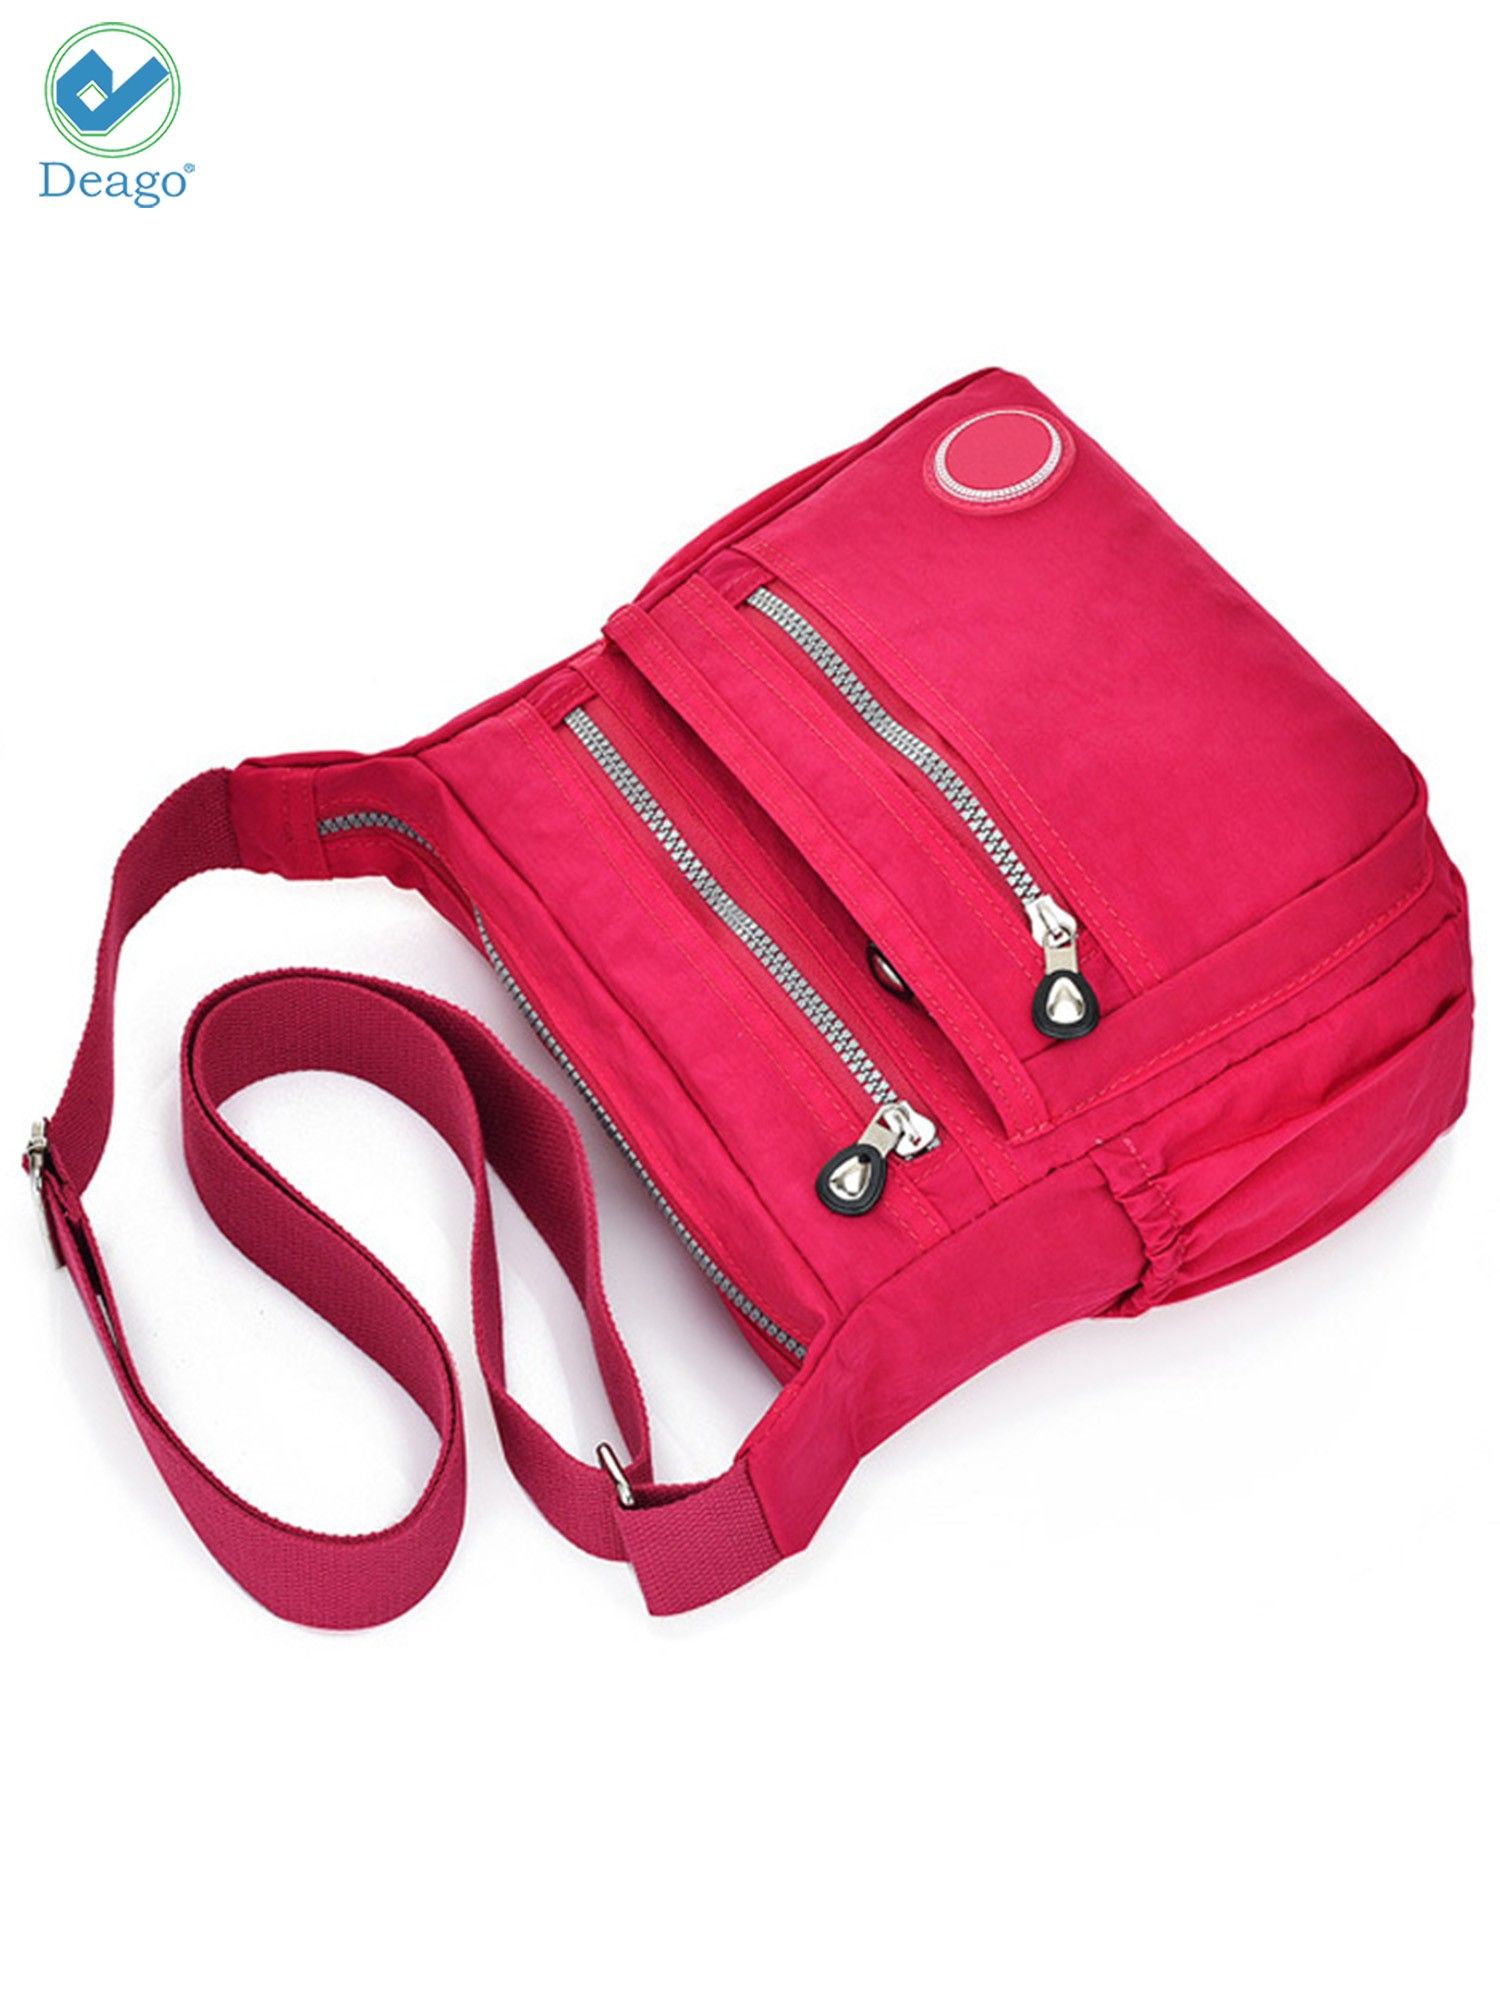 Deago Women's Waterproof Nylon Crossboby Shoulder Bag Casual Messenger Bag Handbag with Multi Pockets (Rose Red) - image 2 of 10